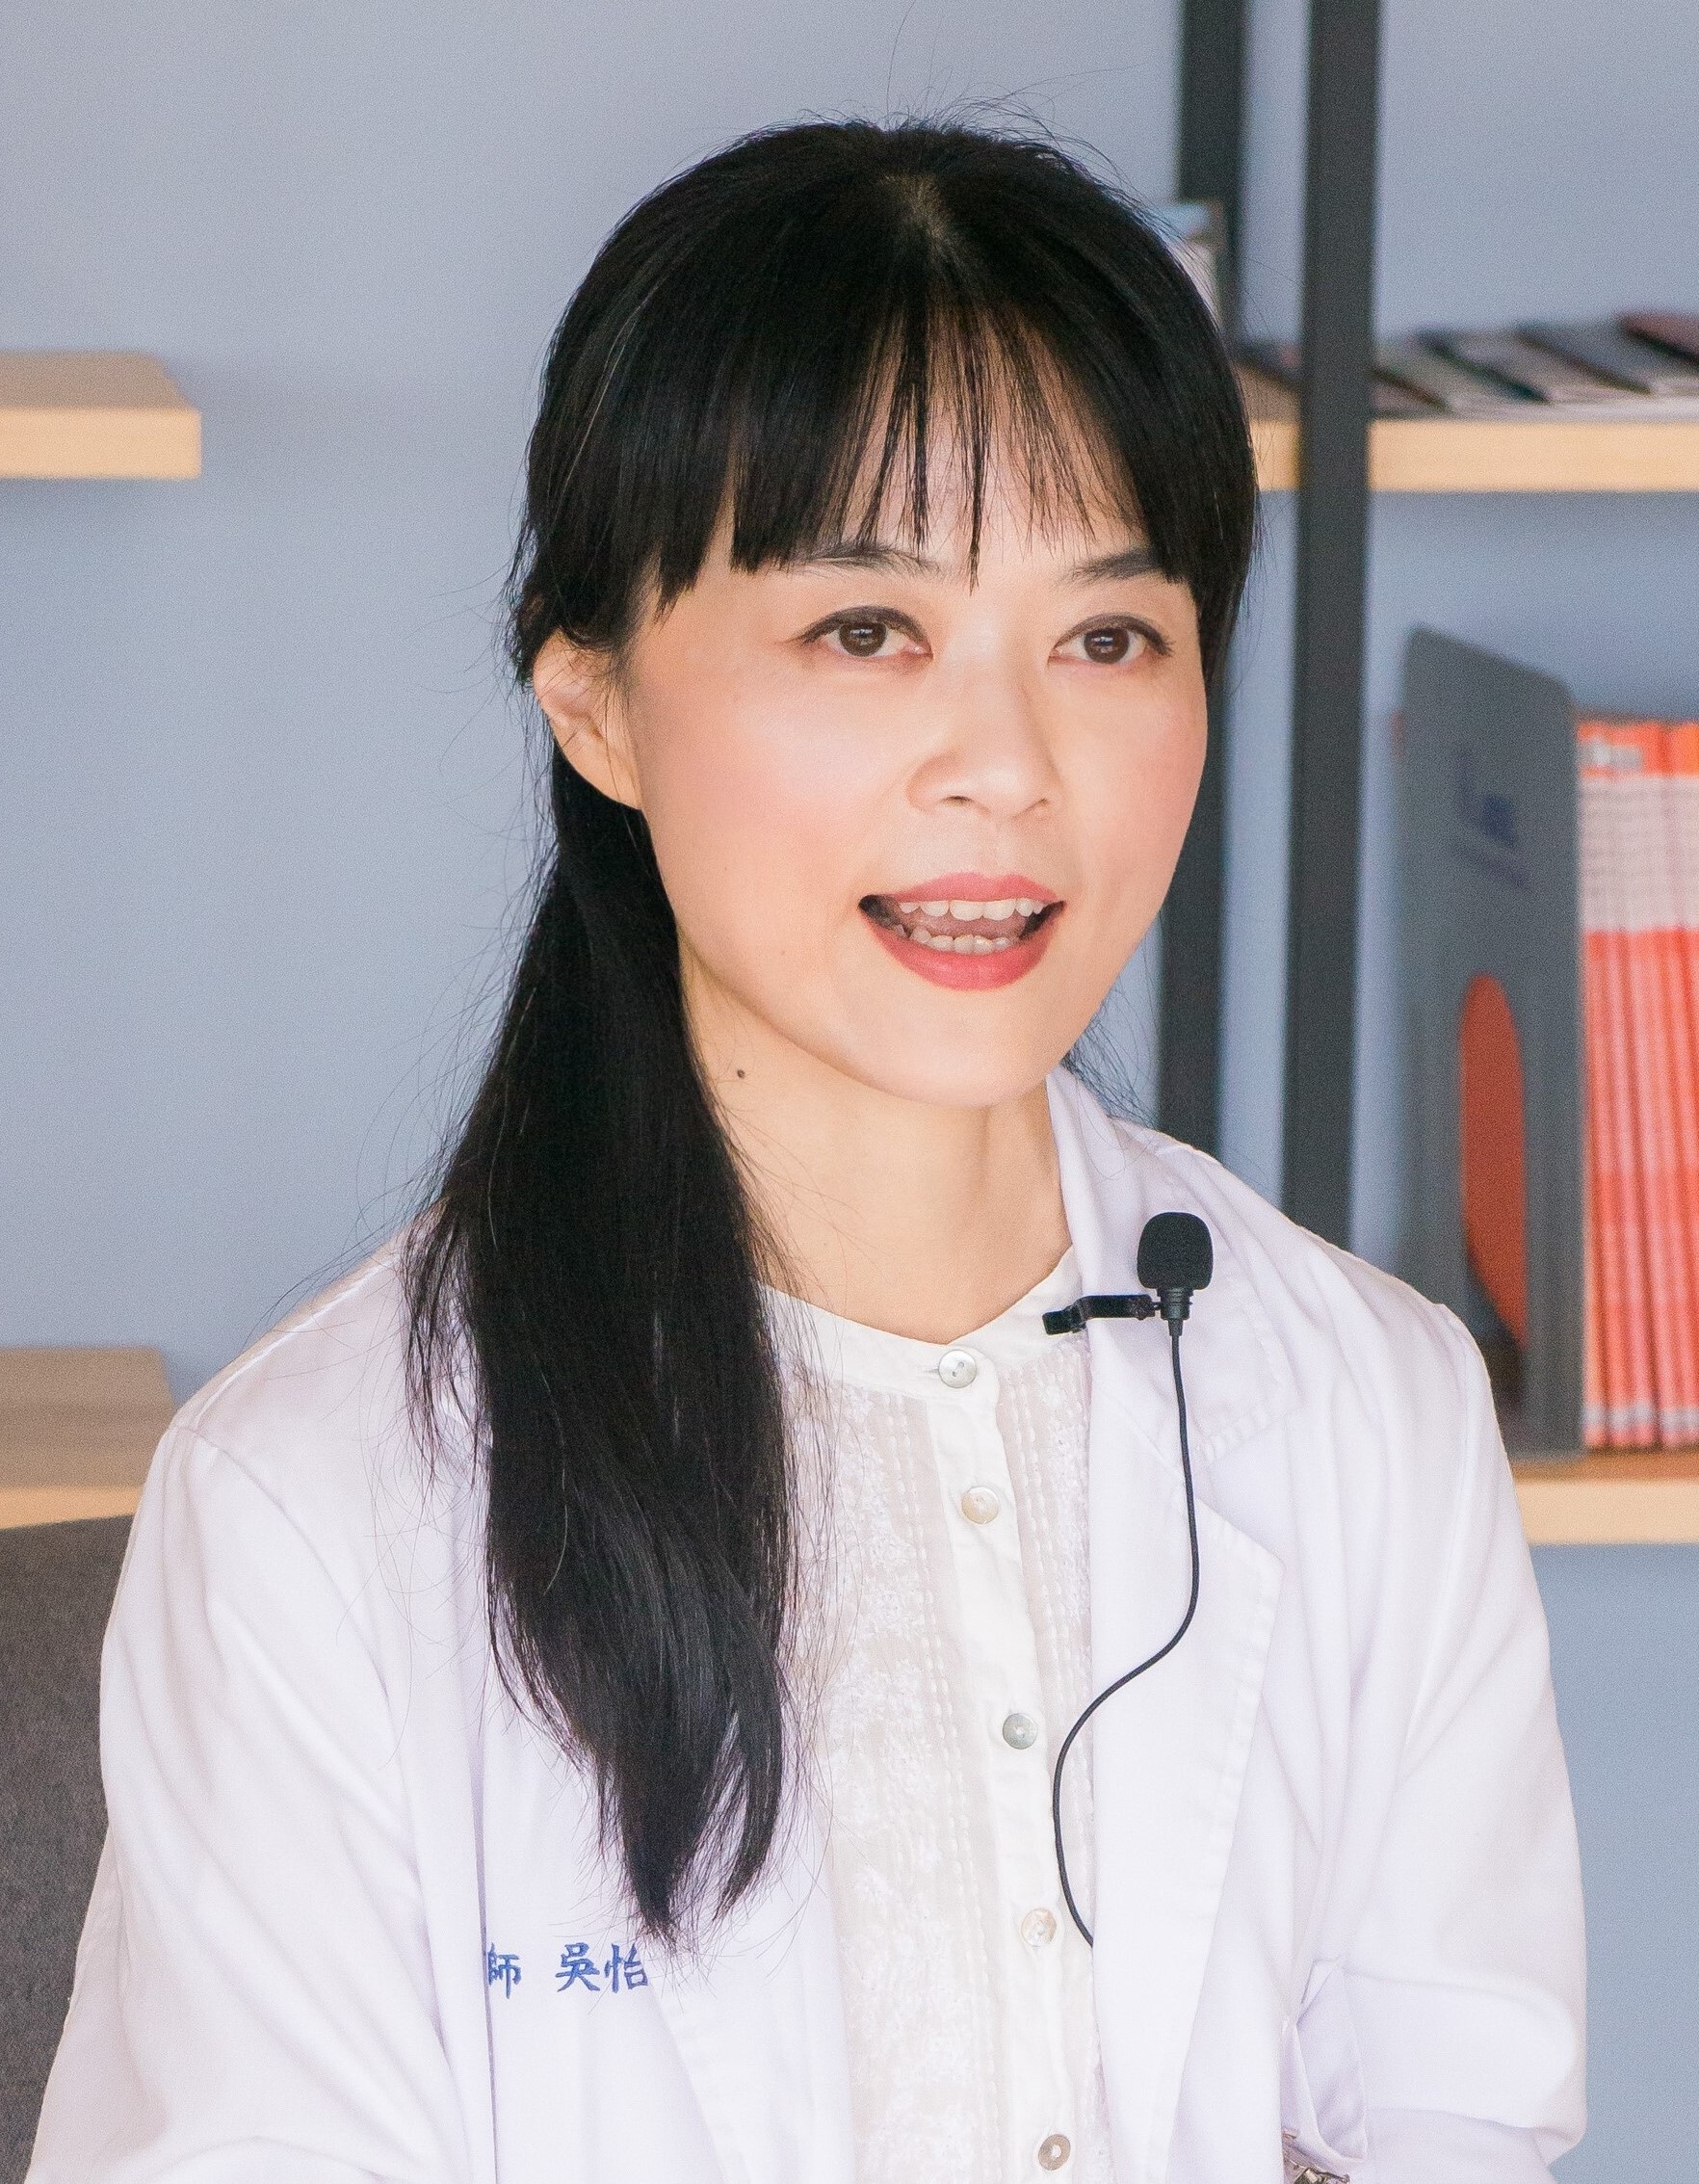 Yi-Jen Wu